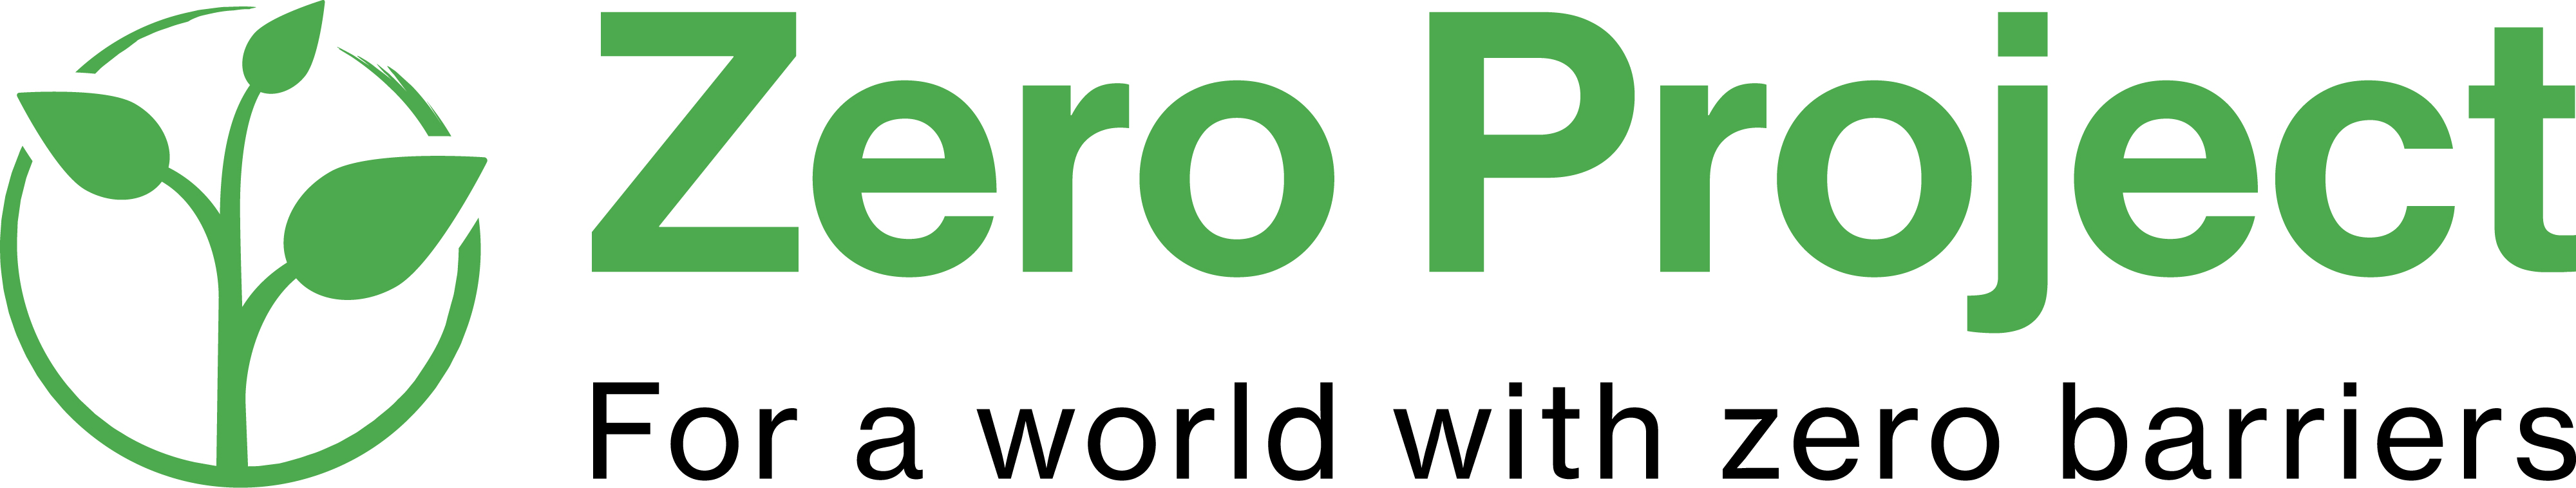 Zero Project logo